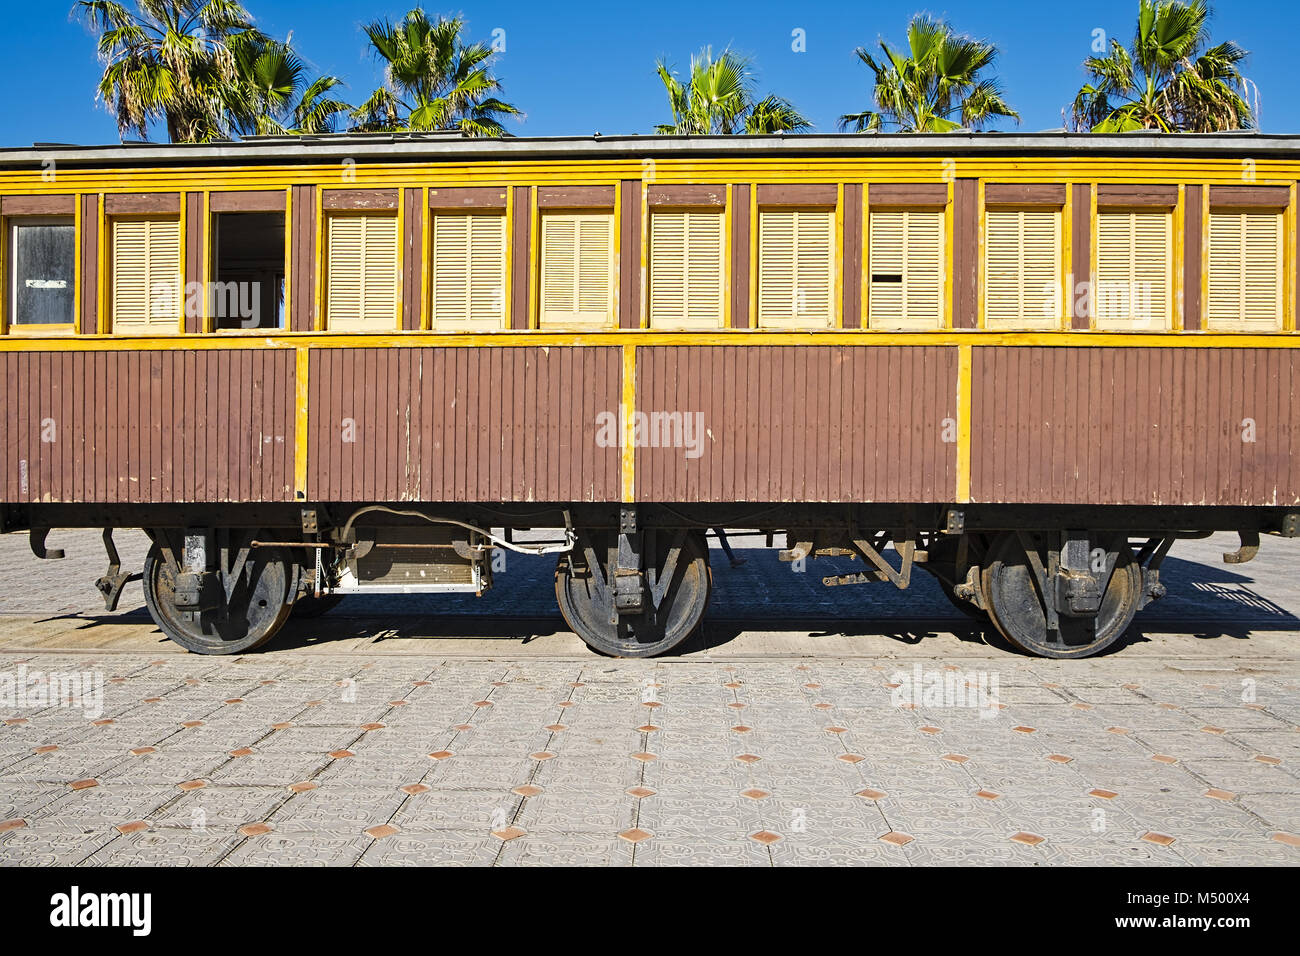 Retro Railway Carriage in Israel Stock Photo